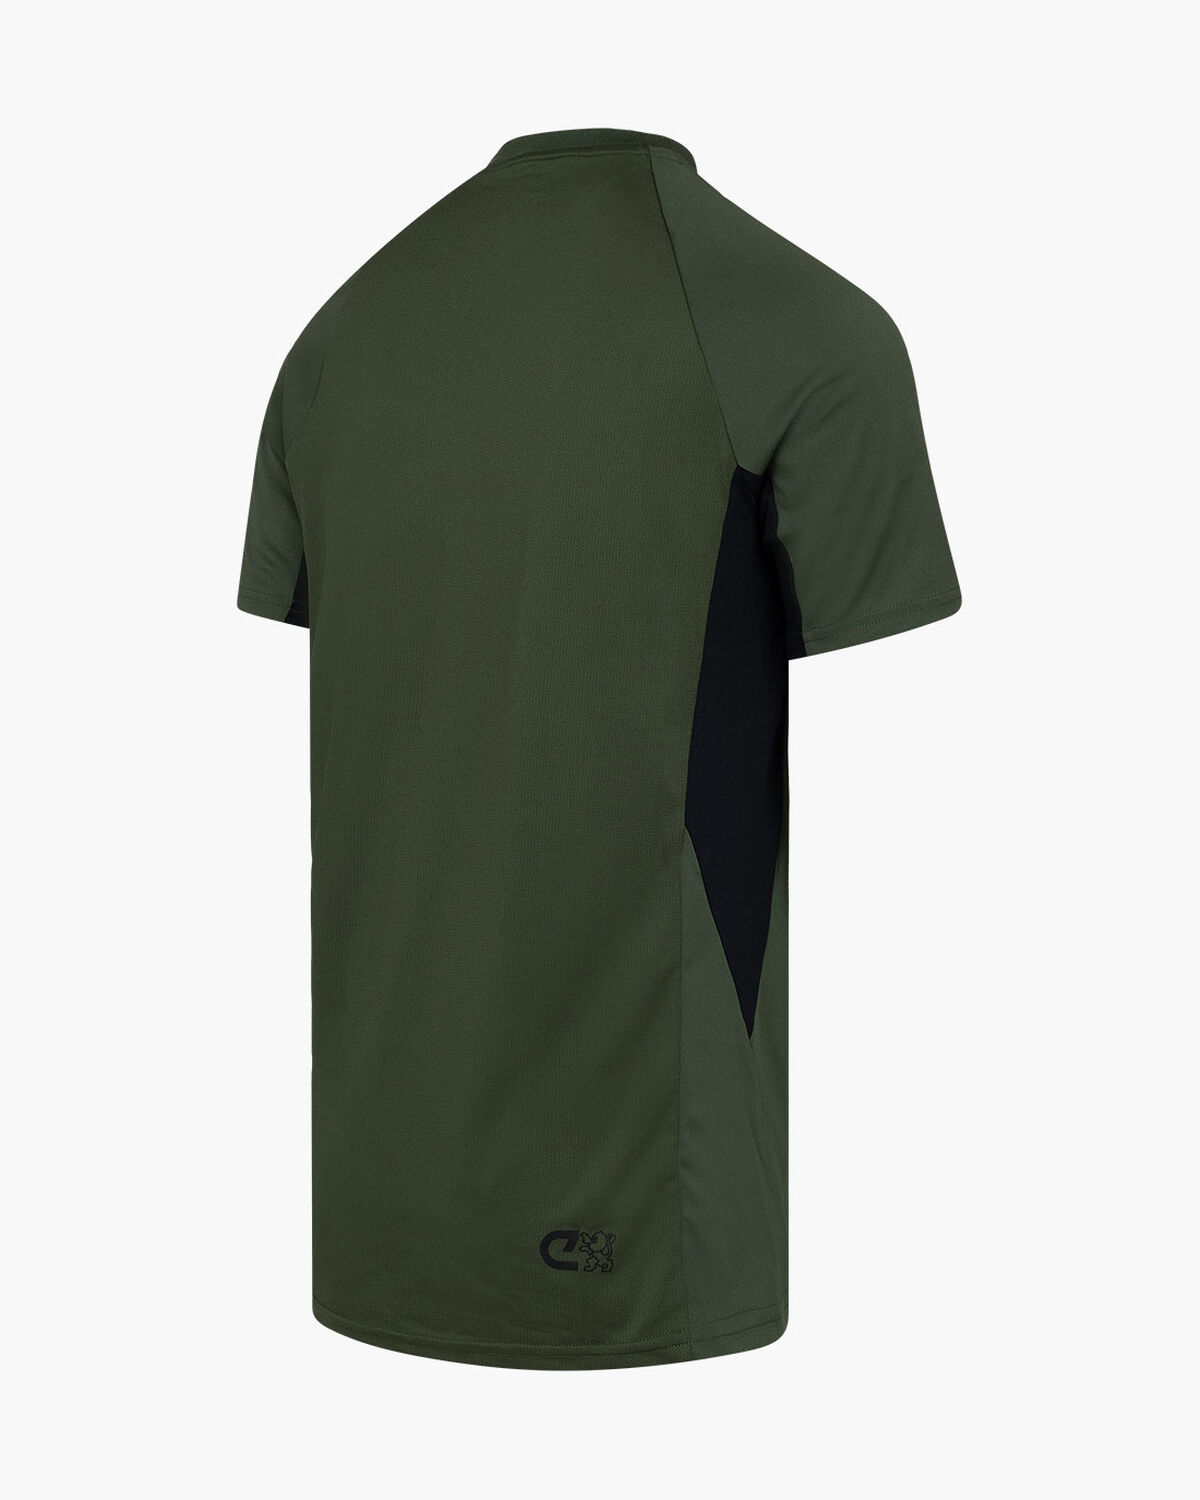 Cruyff Tech Turn Shirt Senior, Green/Black, hi-res